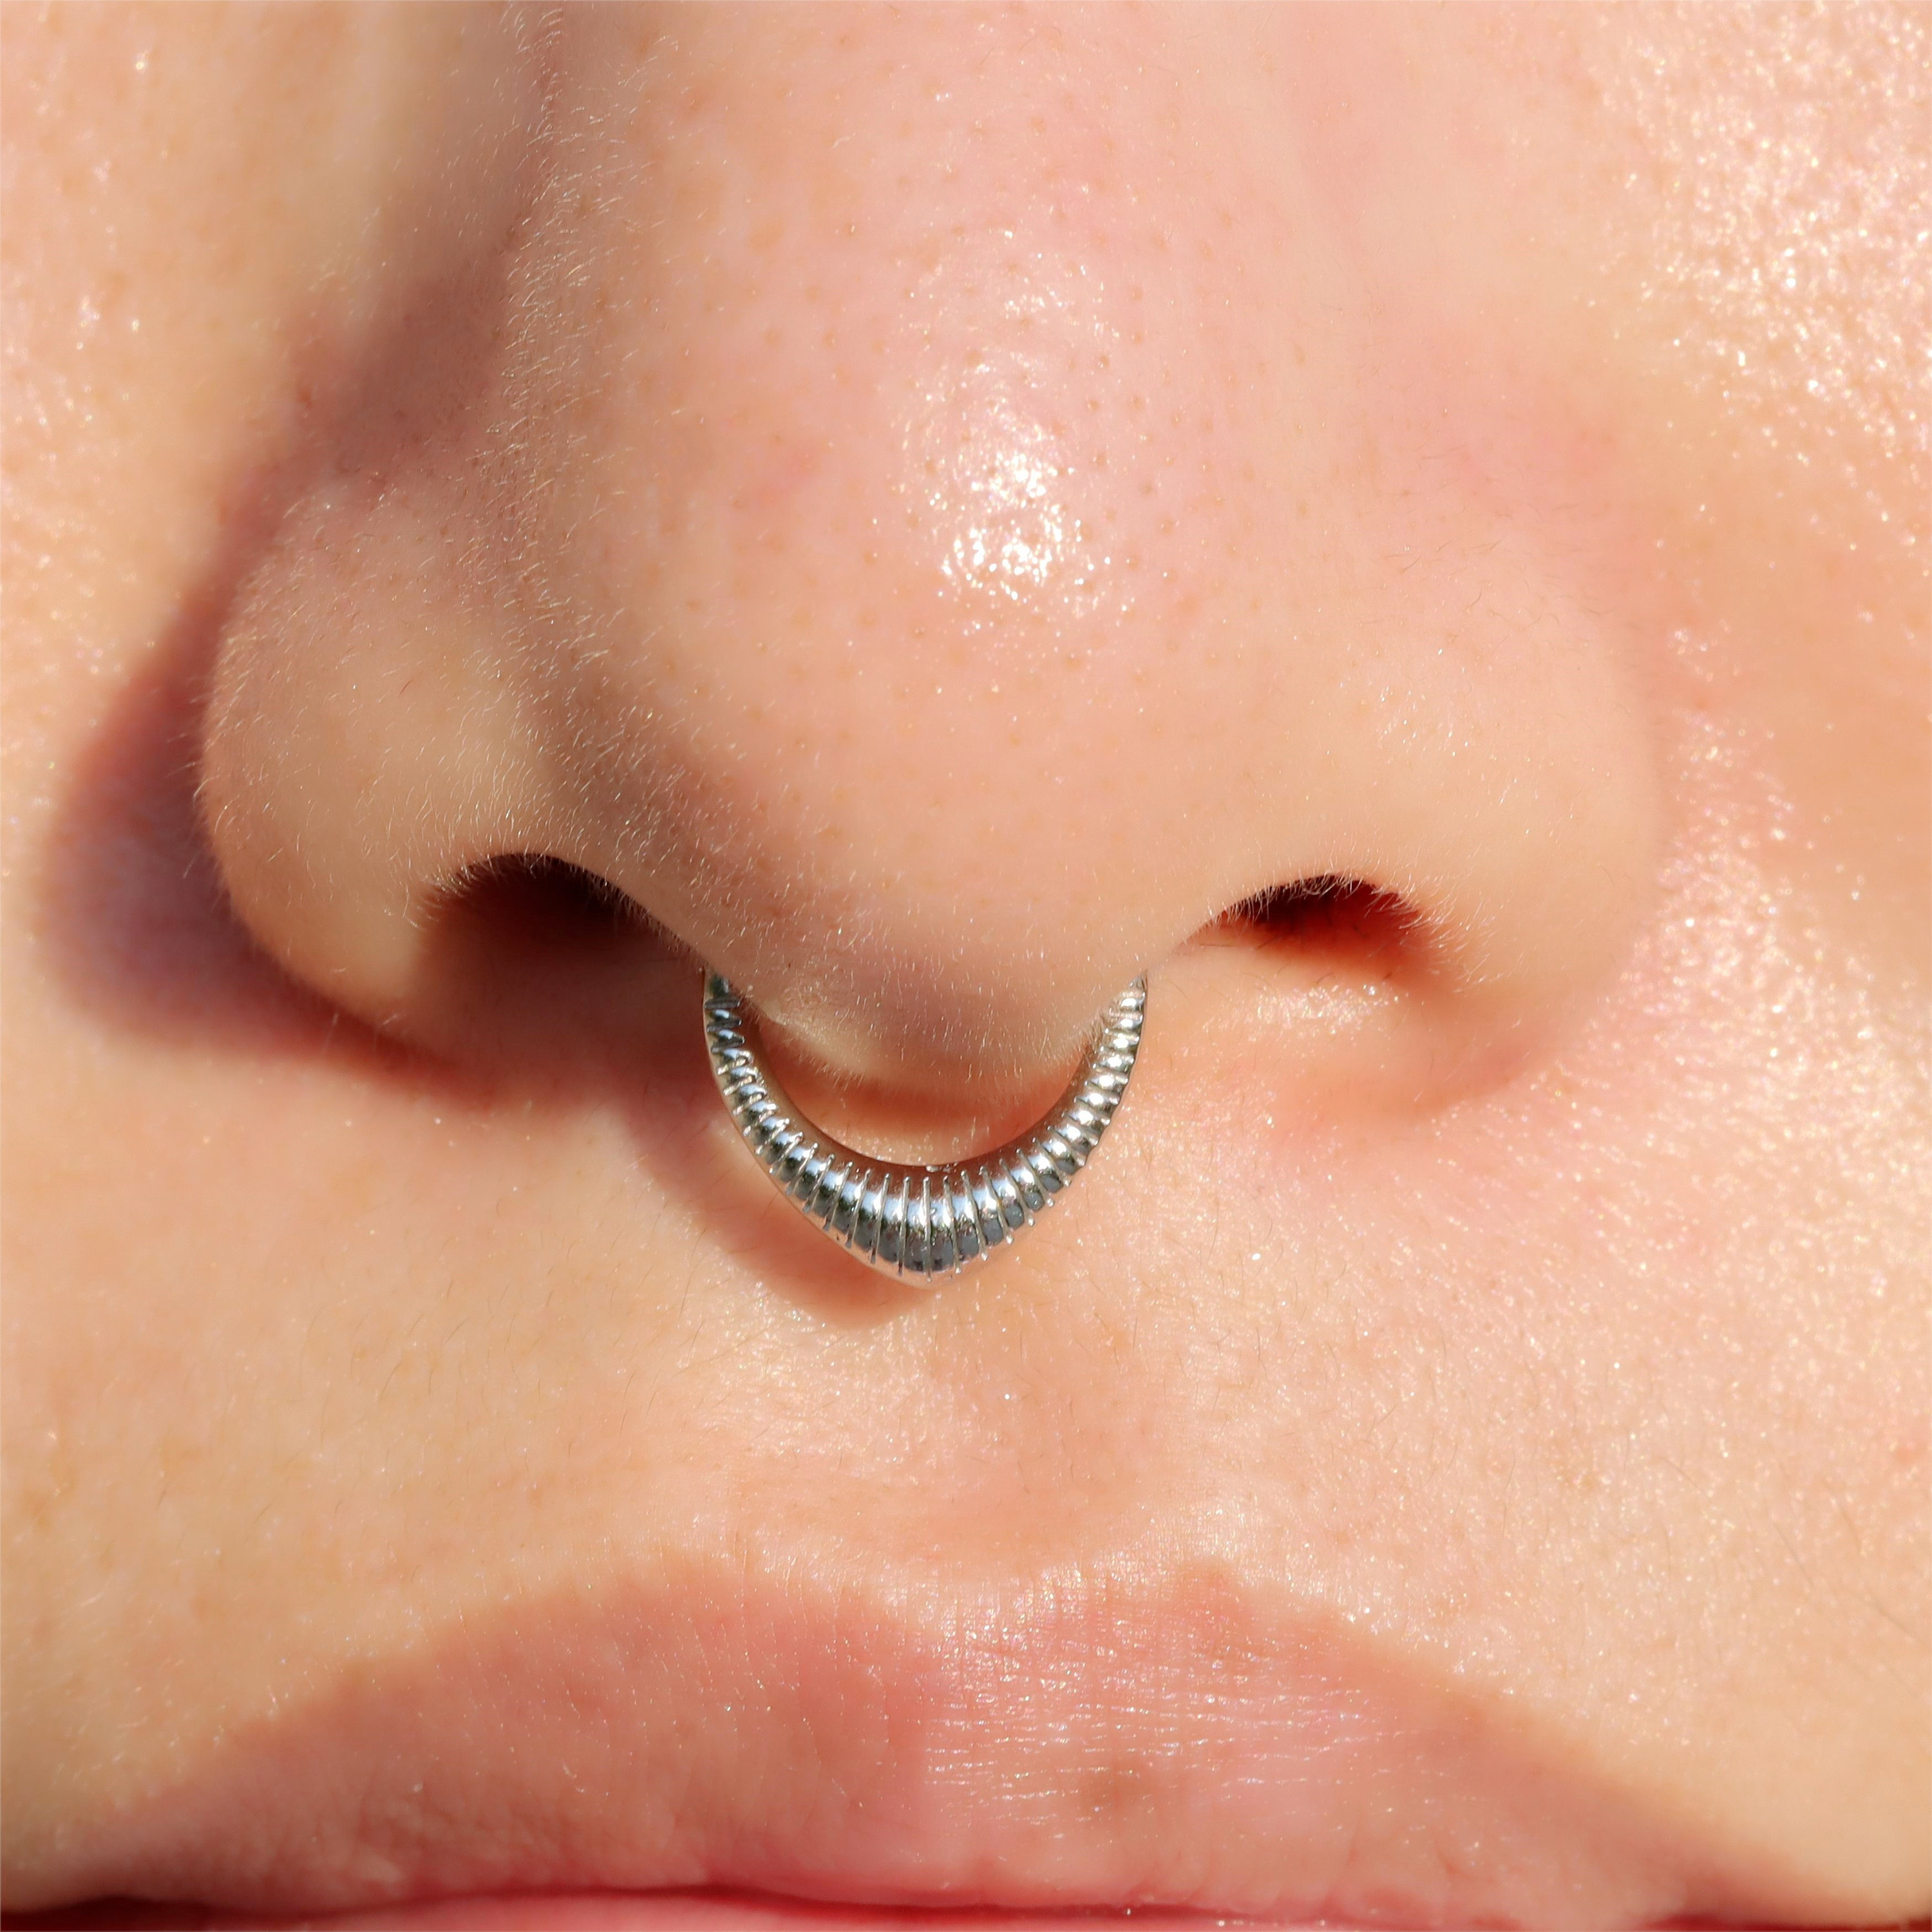 Septum Hoop/ Steel Goth - Septum Septum Gold 316L 16G Septum Silver Steel Ring/ Septum Etsy 1.28/10mm Ring Hinged Nose Surgical Piercing/ Ring/